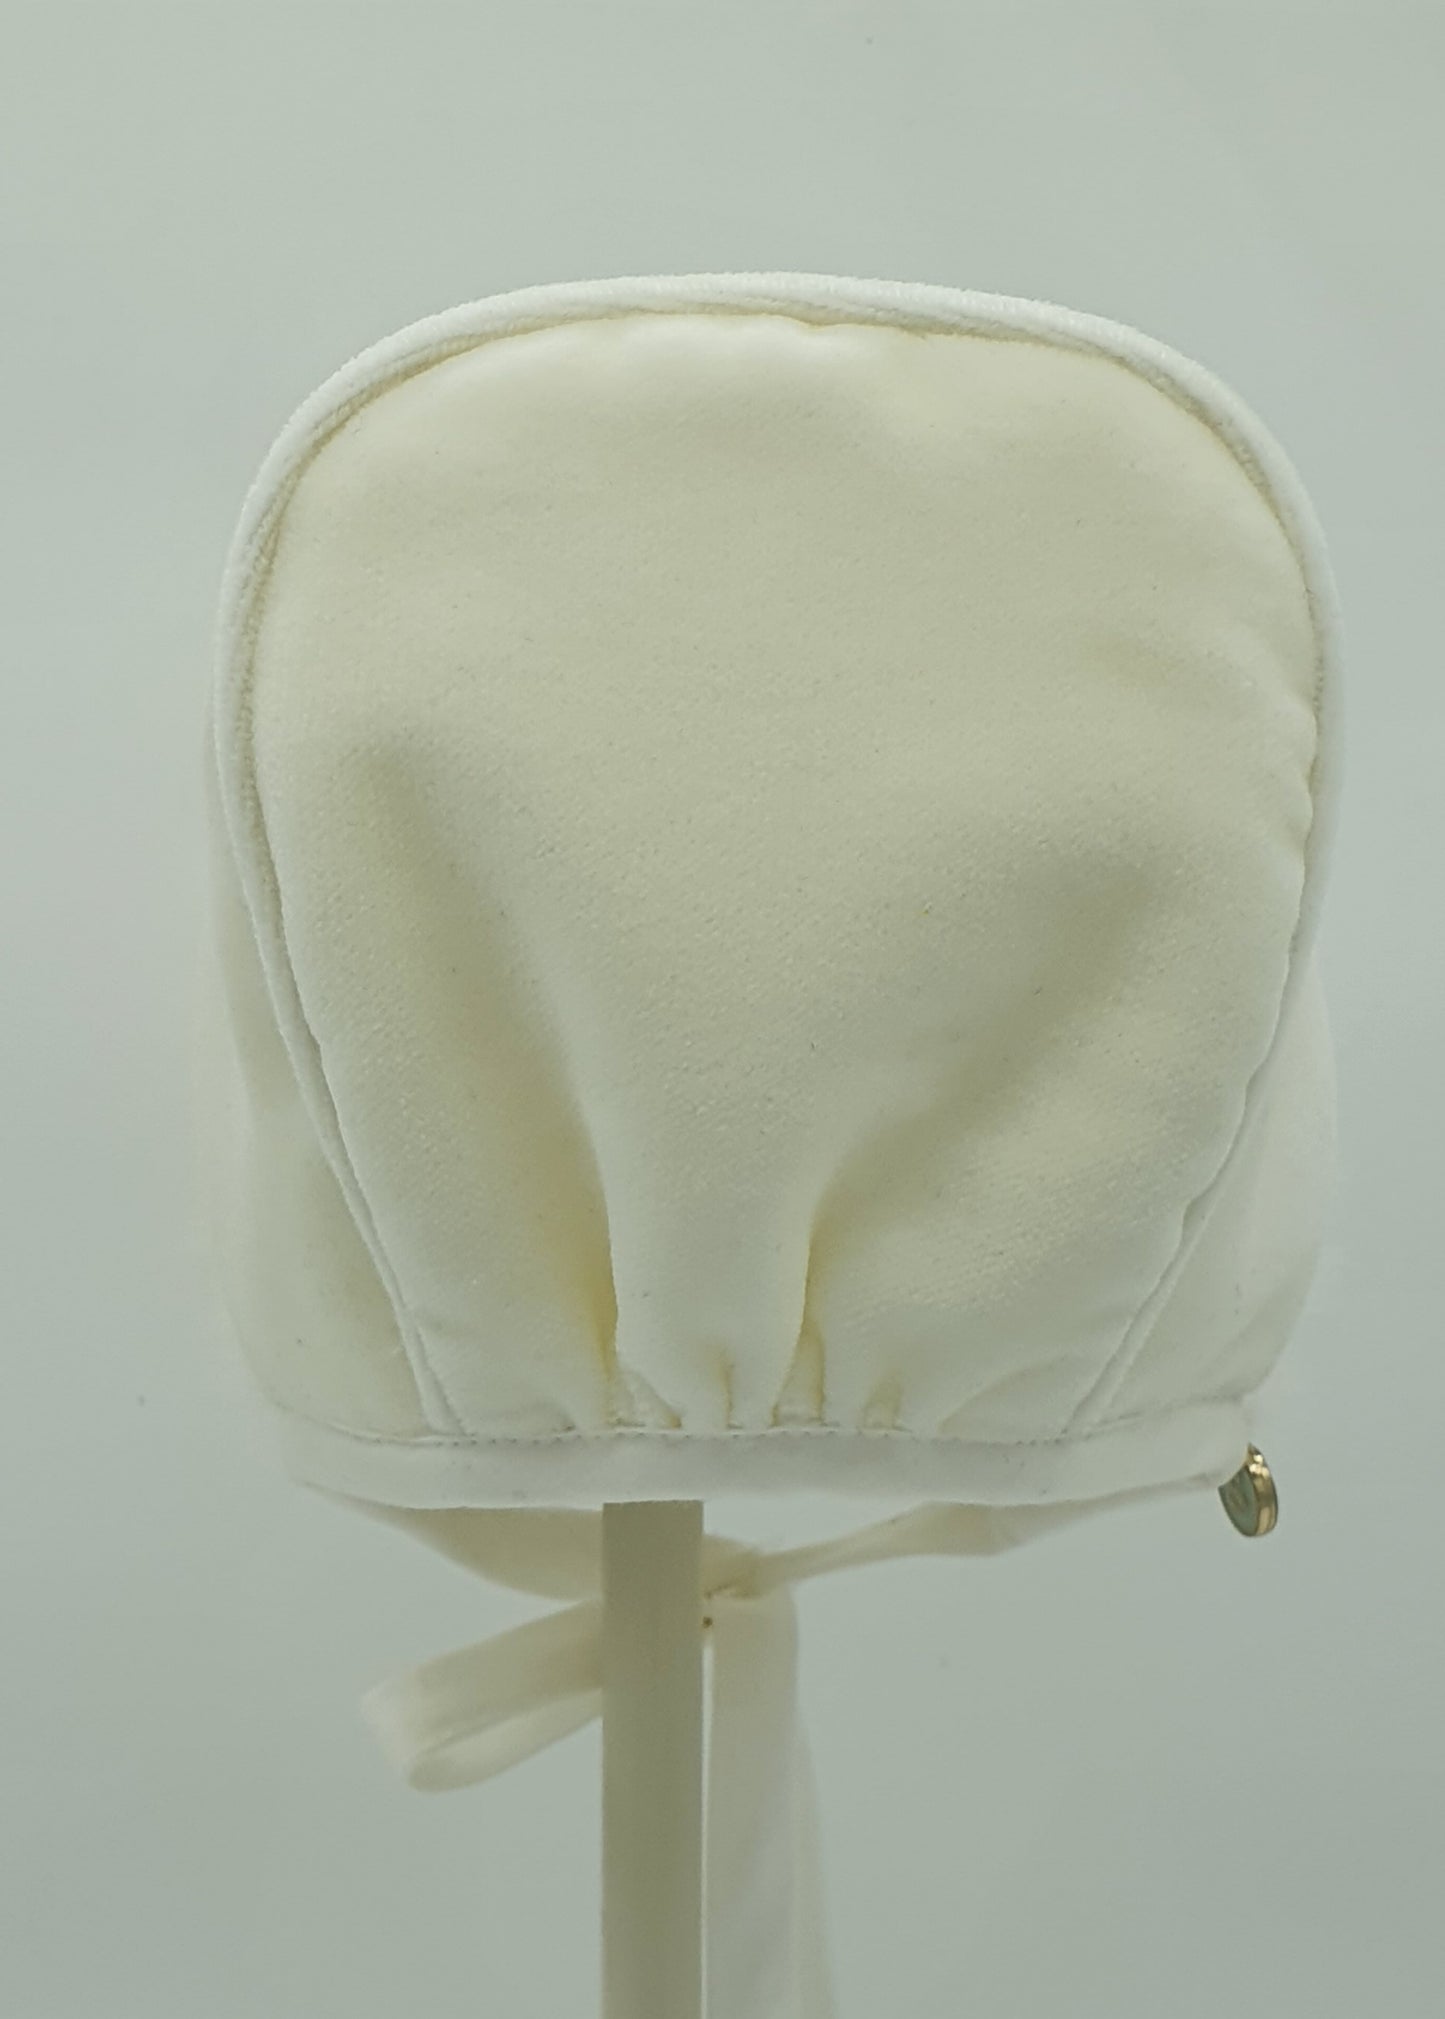 Exclusive Bonnet, Ivory Velvet with Ivory Fur Brim